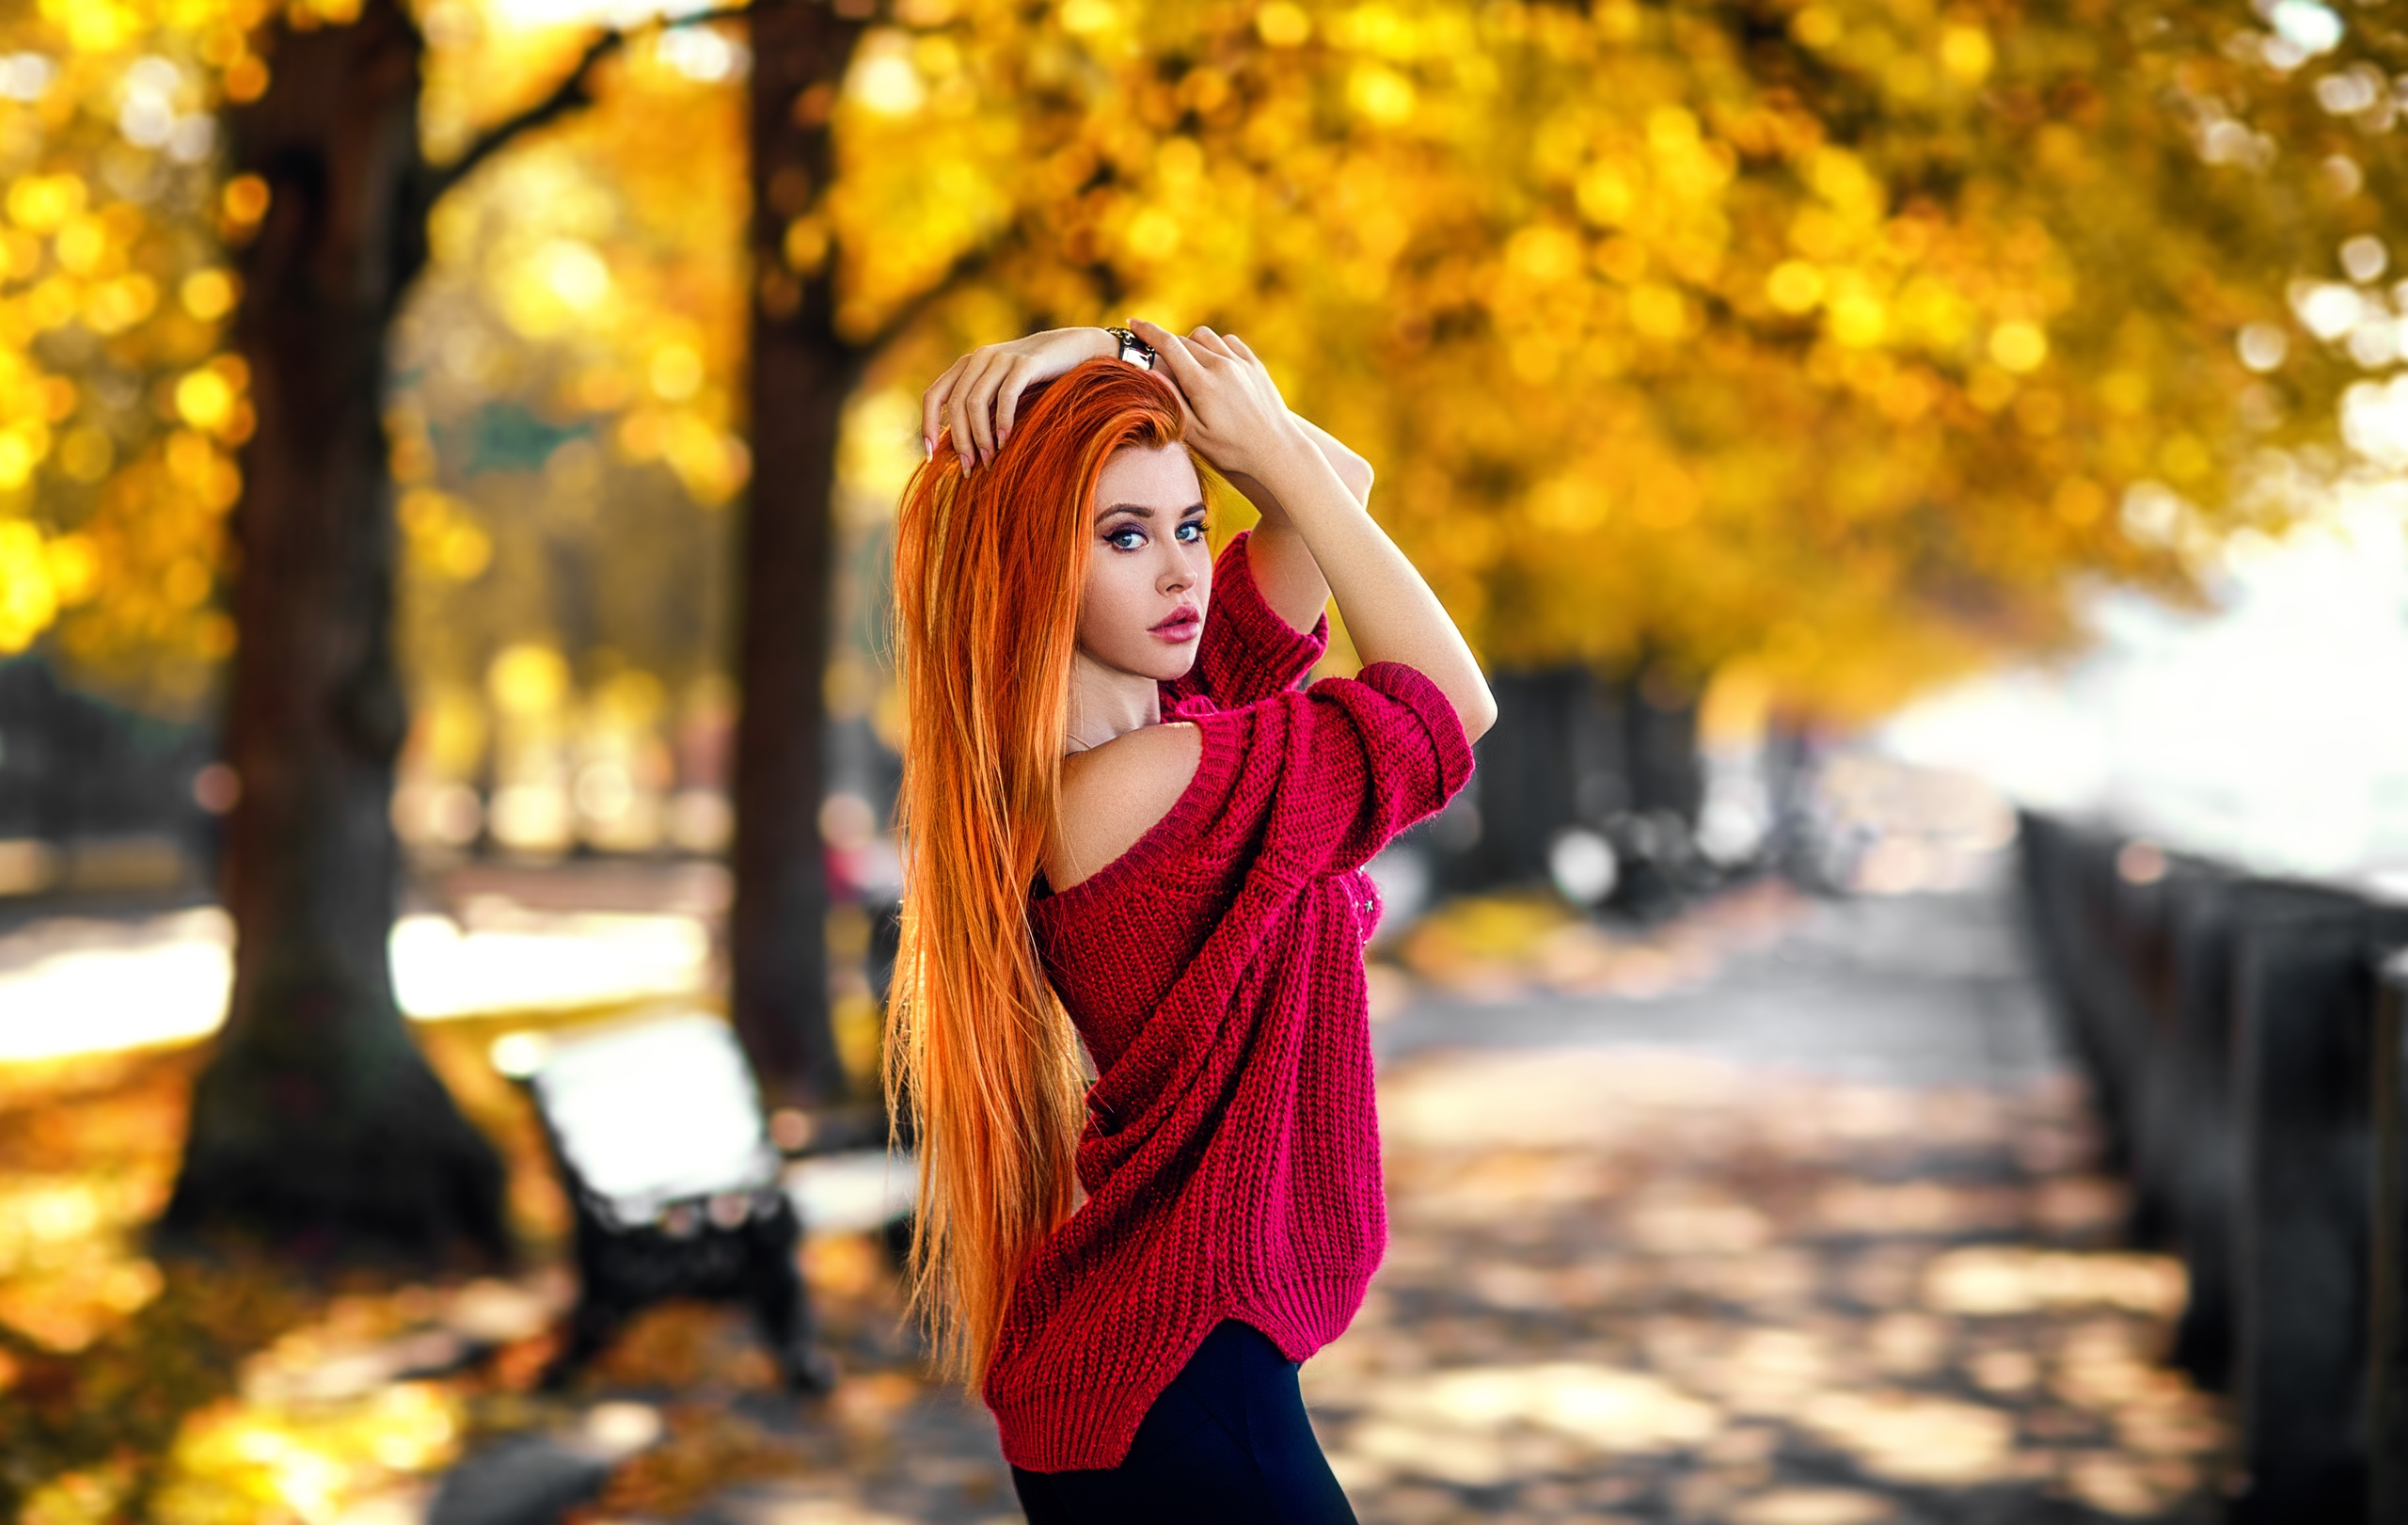 Dana Bounty Women Model Redhead Long Hair Looking At Viewer Side View Portrait Sidewalks Depth Of Fi 2560x1621